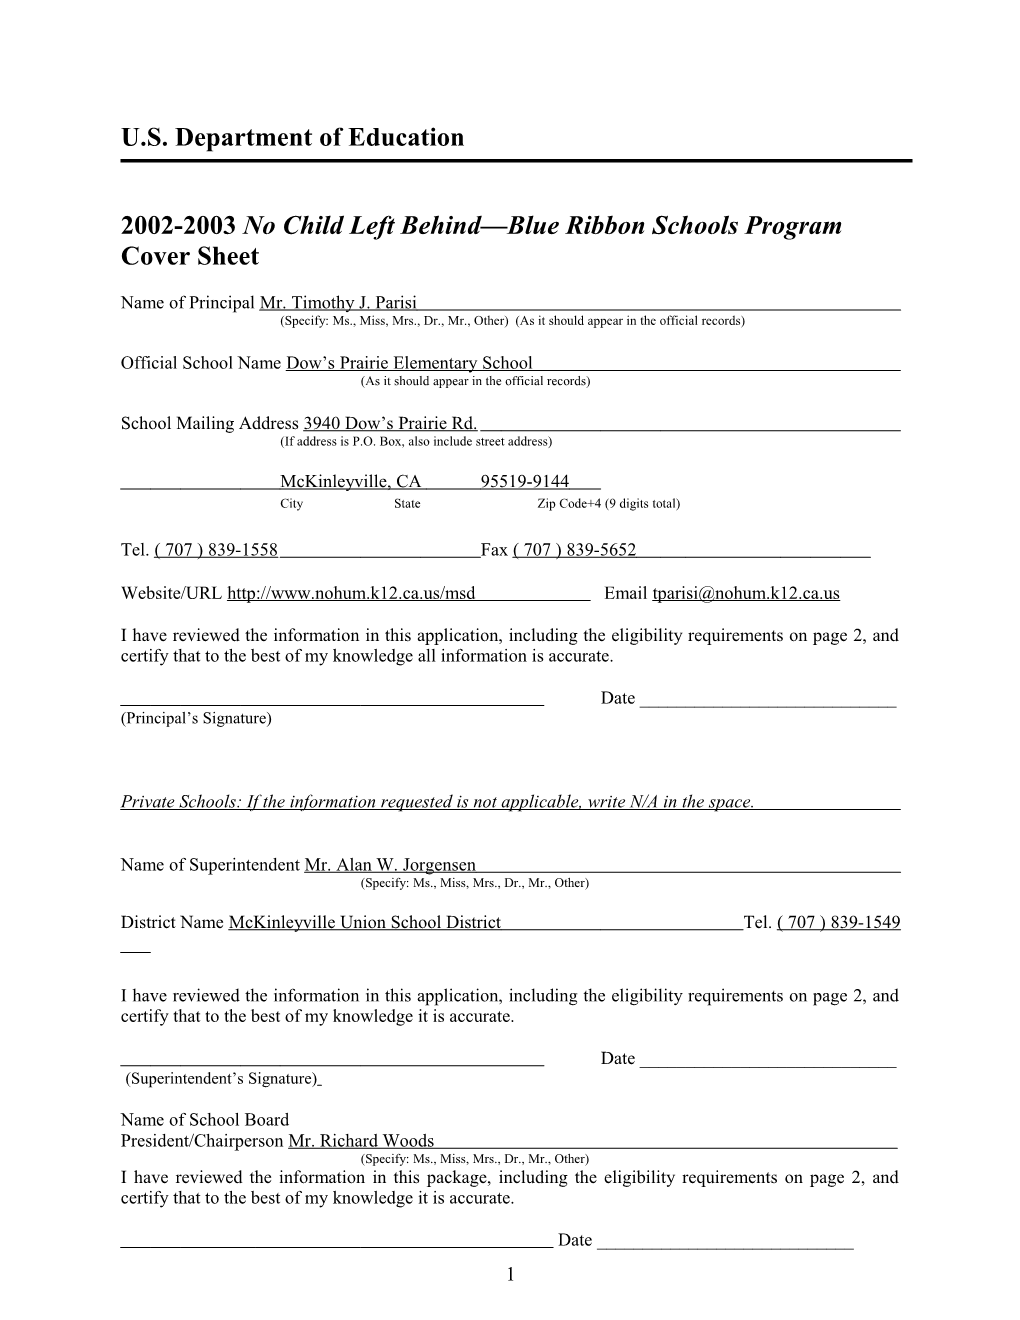 Dow's Prairie Elementary School 2003 No Child Left Behind-Blue Ribbon School (Msword)